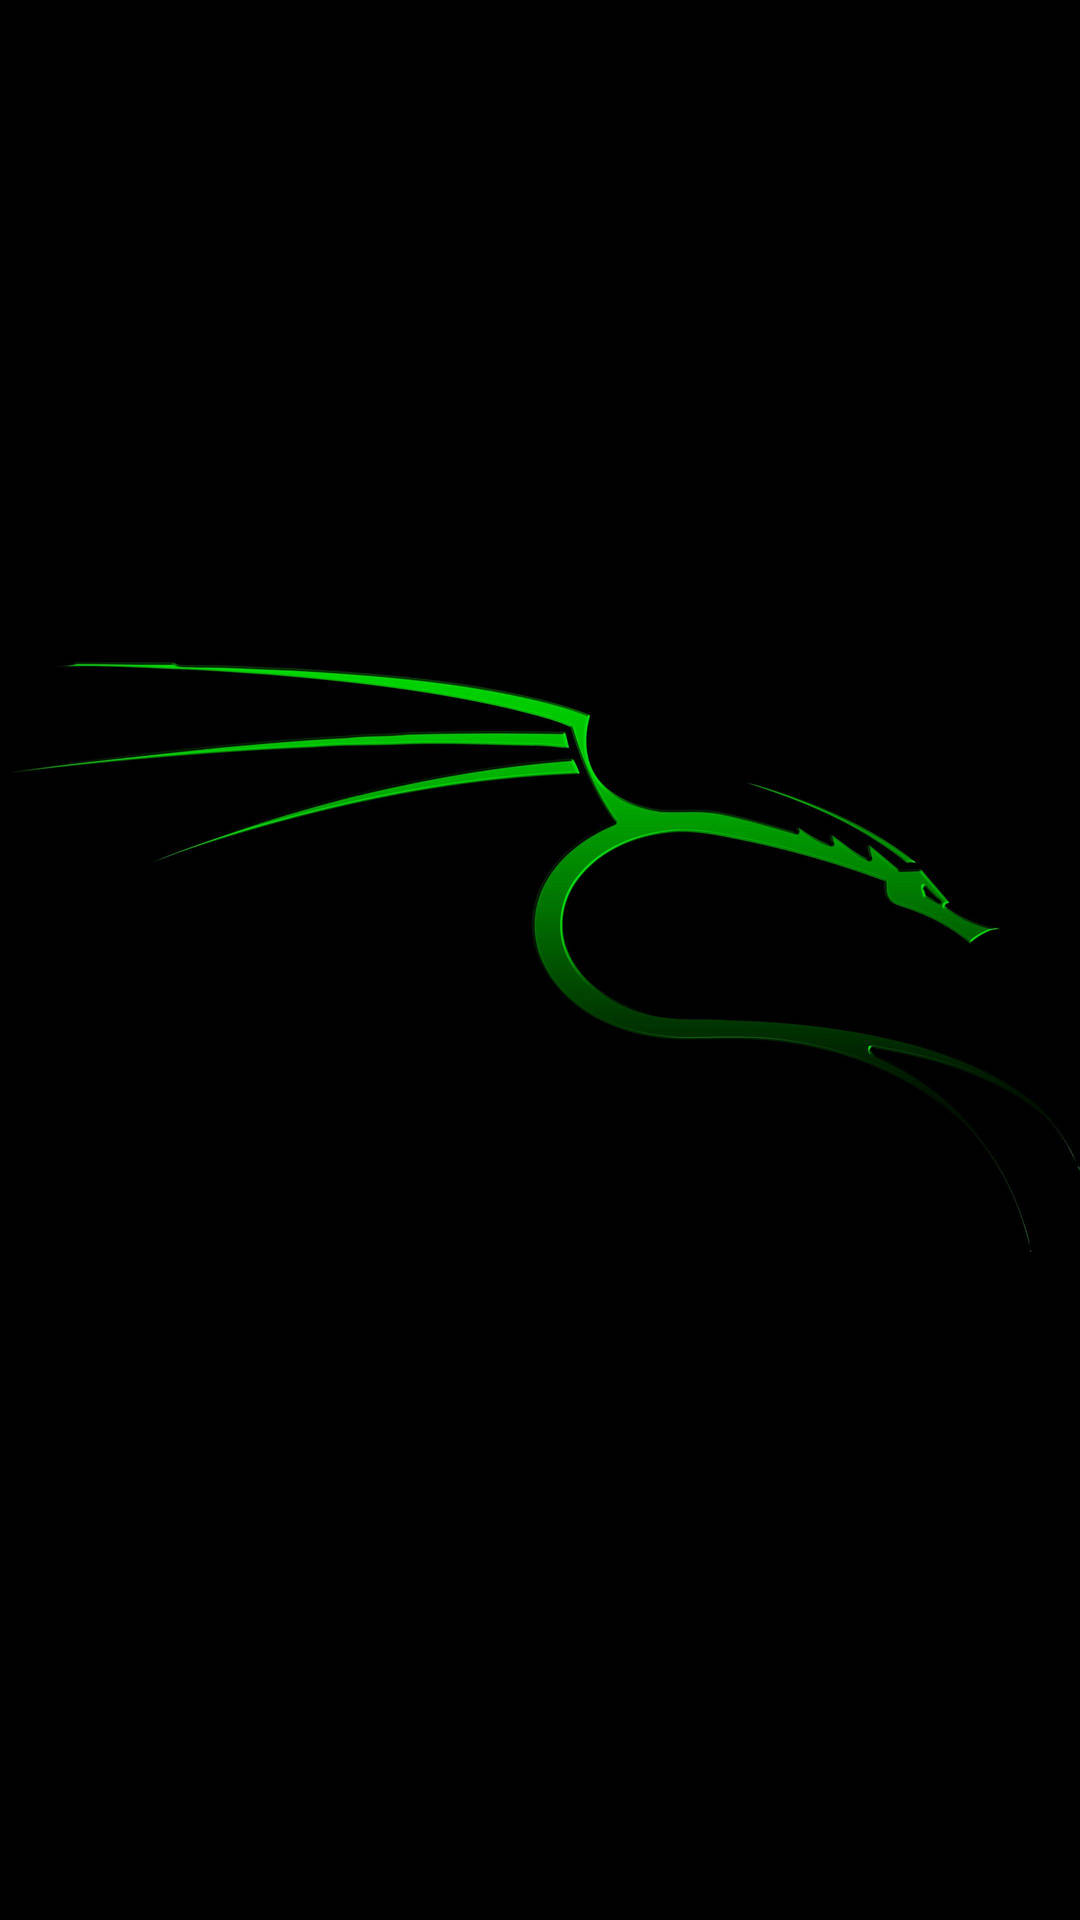 Kali Linux Neon Dragon Background